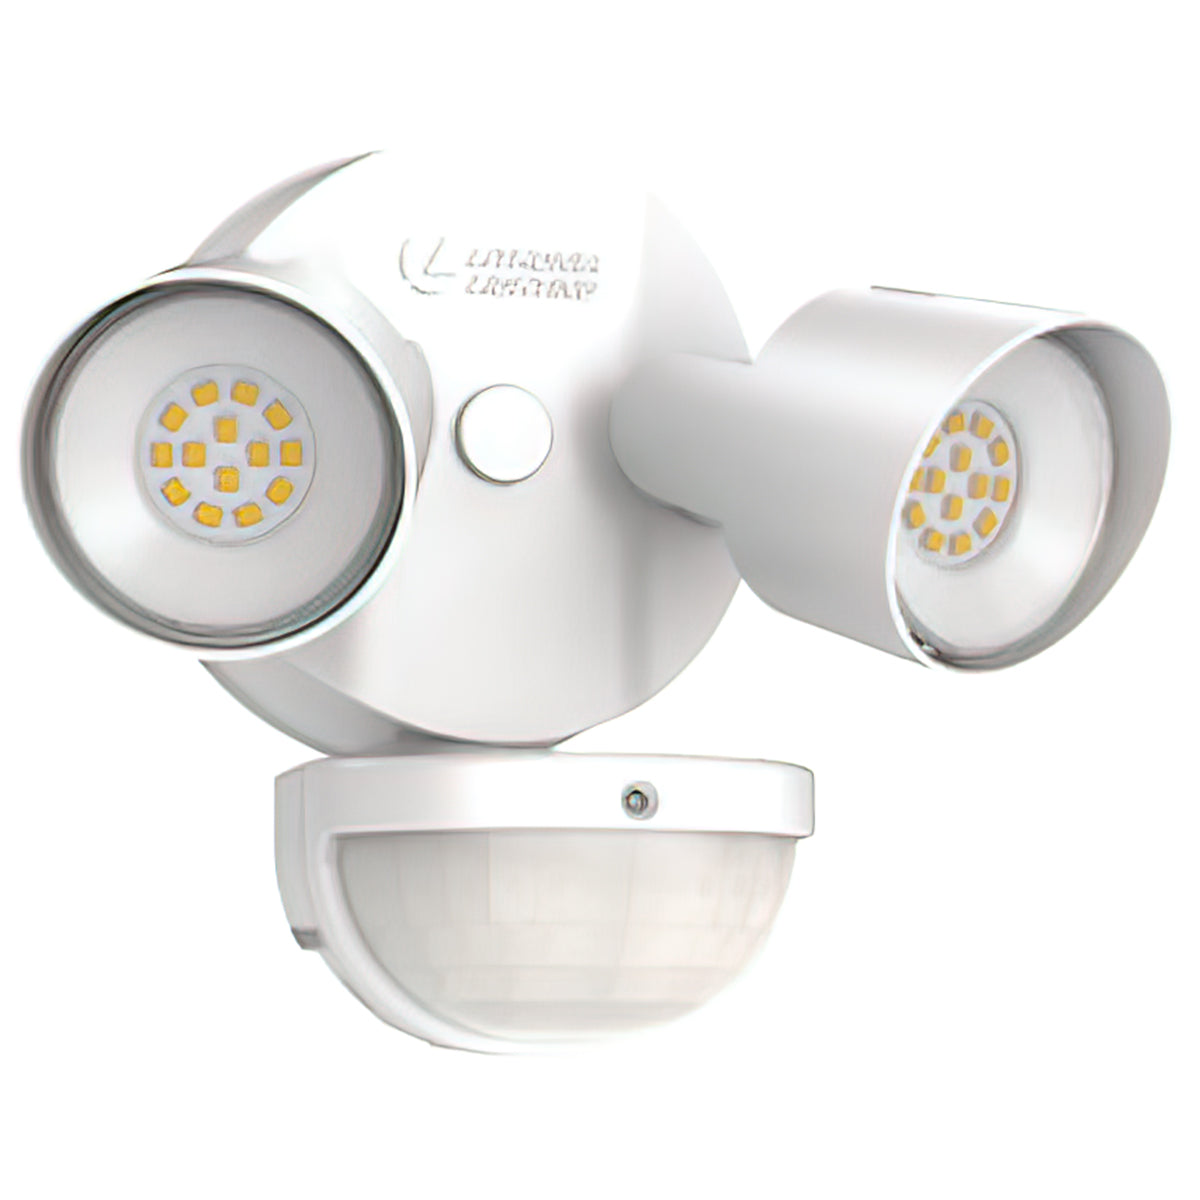 LED Security Flood Light With Motion Sensor, 2750 Lumens, 26 Watt, 4000K, Adjustable 2-Head, White Finish